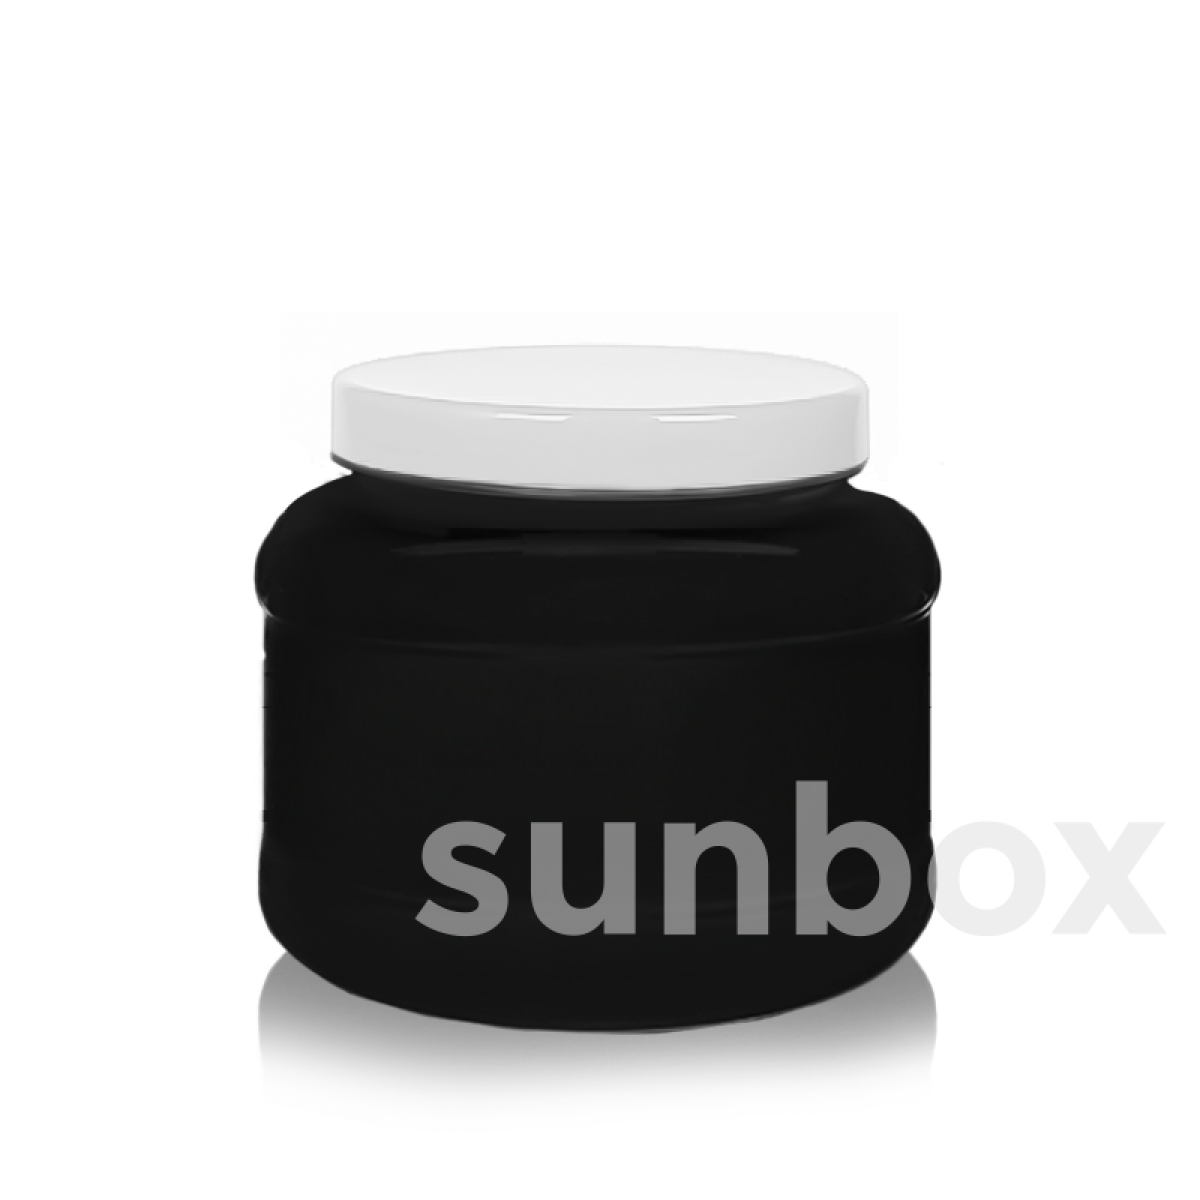 sunbox_prod_5